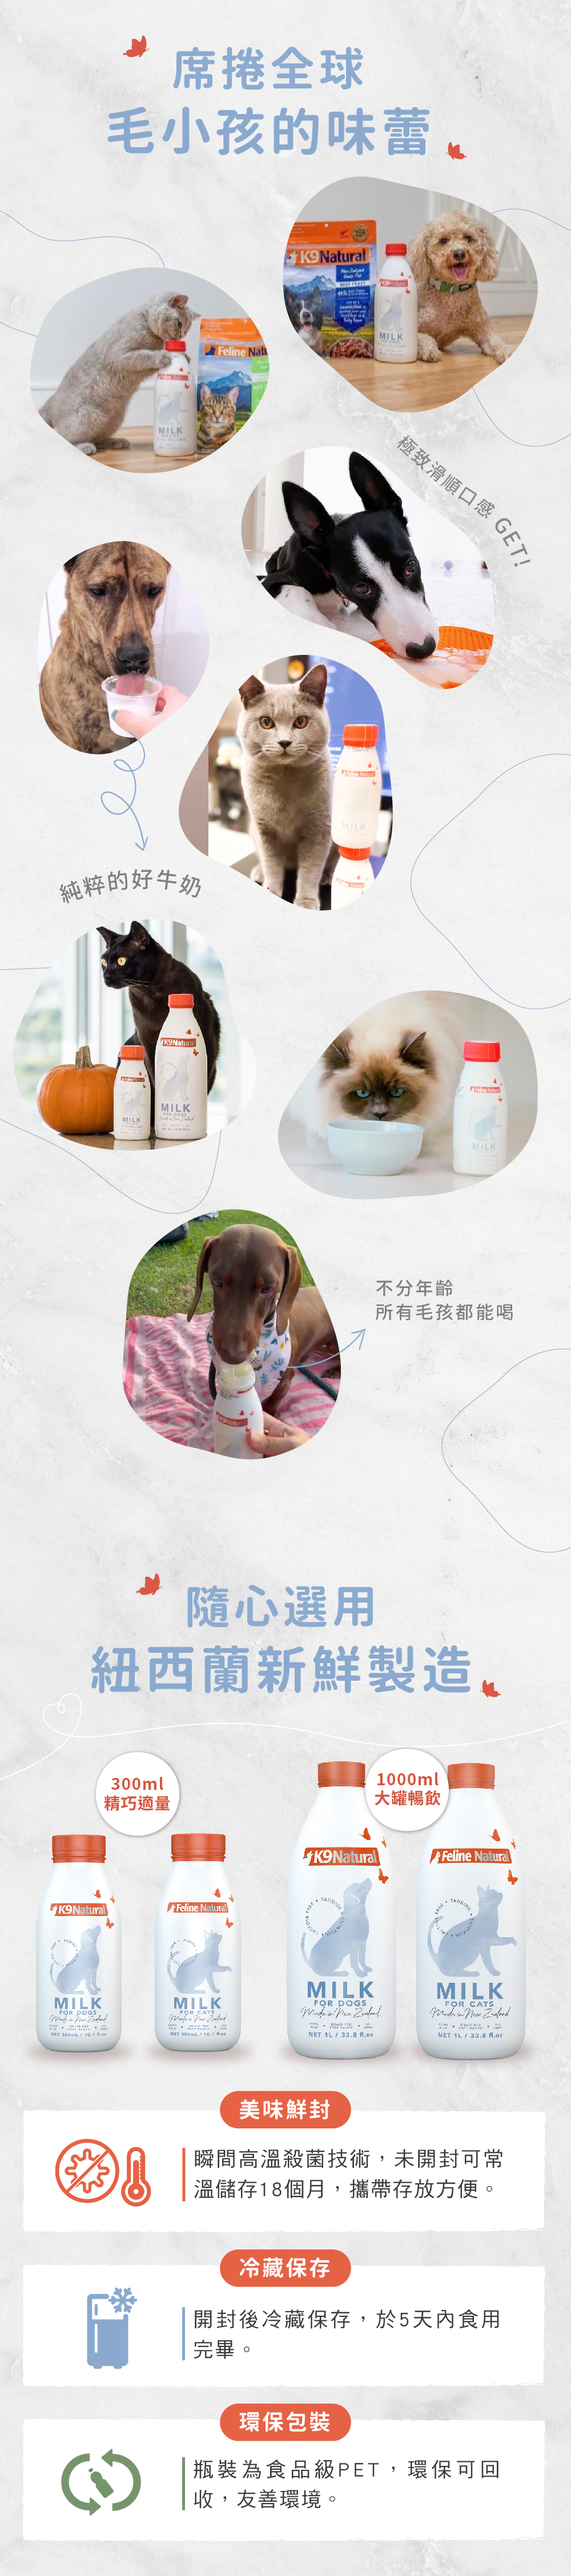 K9 零乳糖牛奶 商品說明頁3